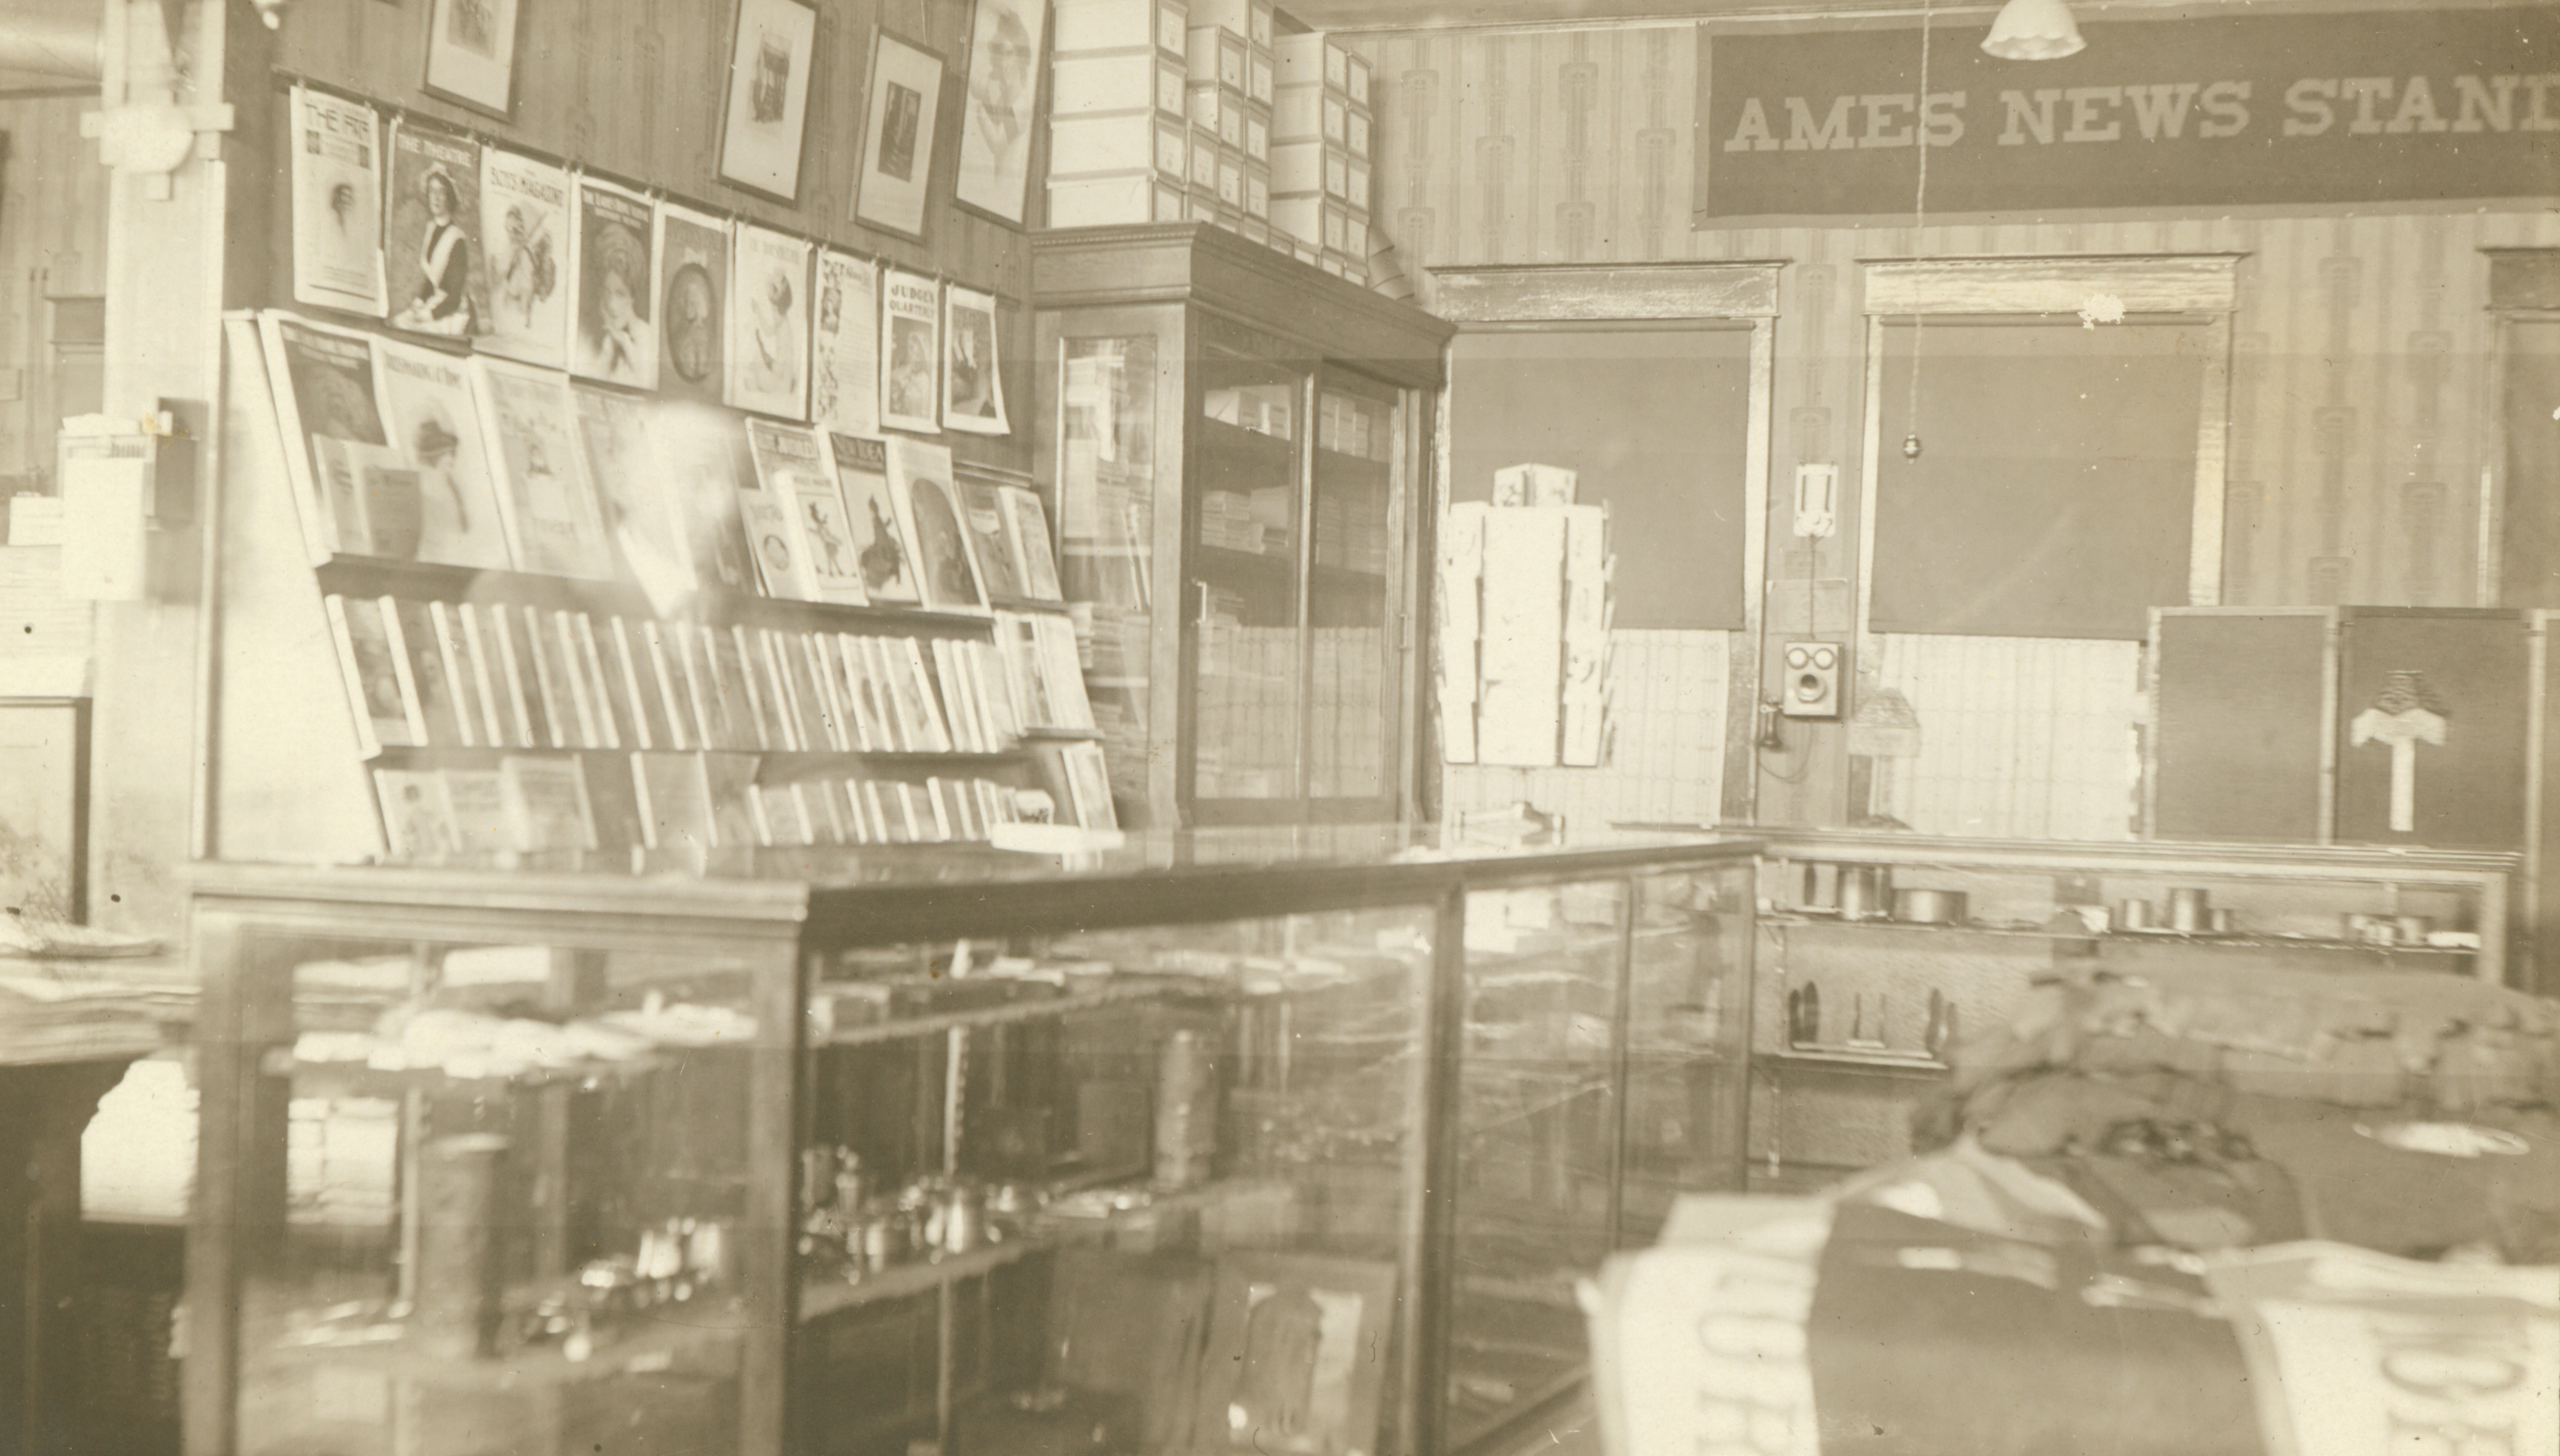 1913_ames_news_stand_interior.jpg